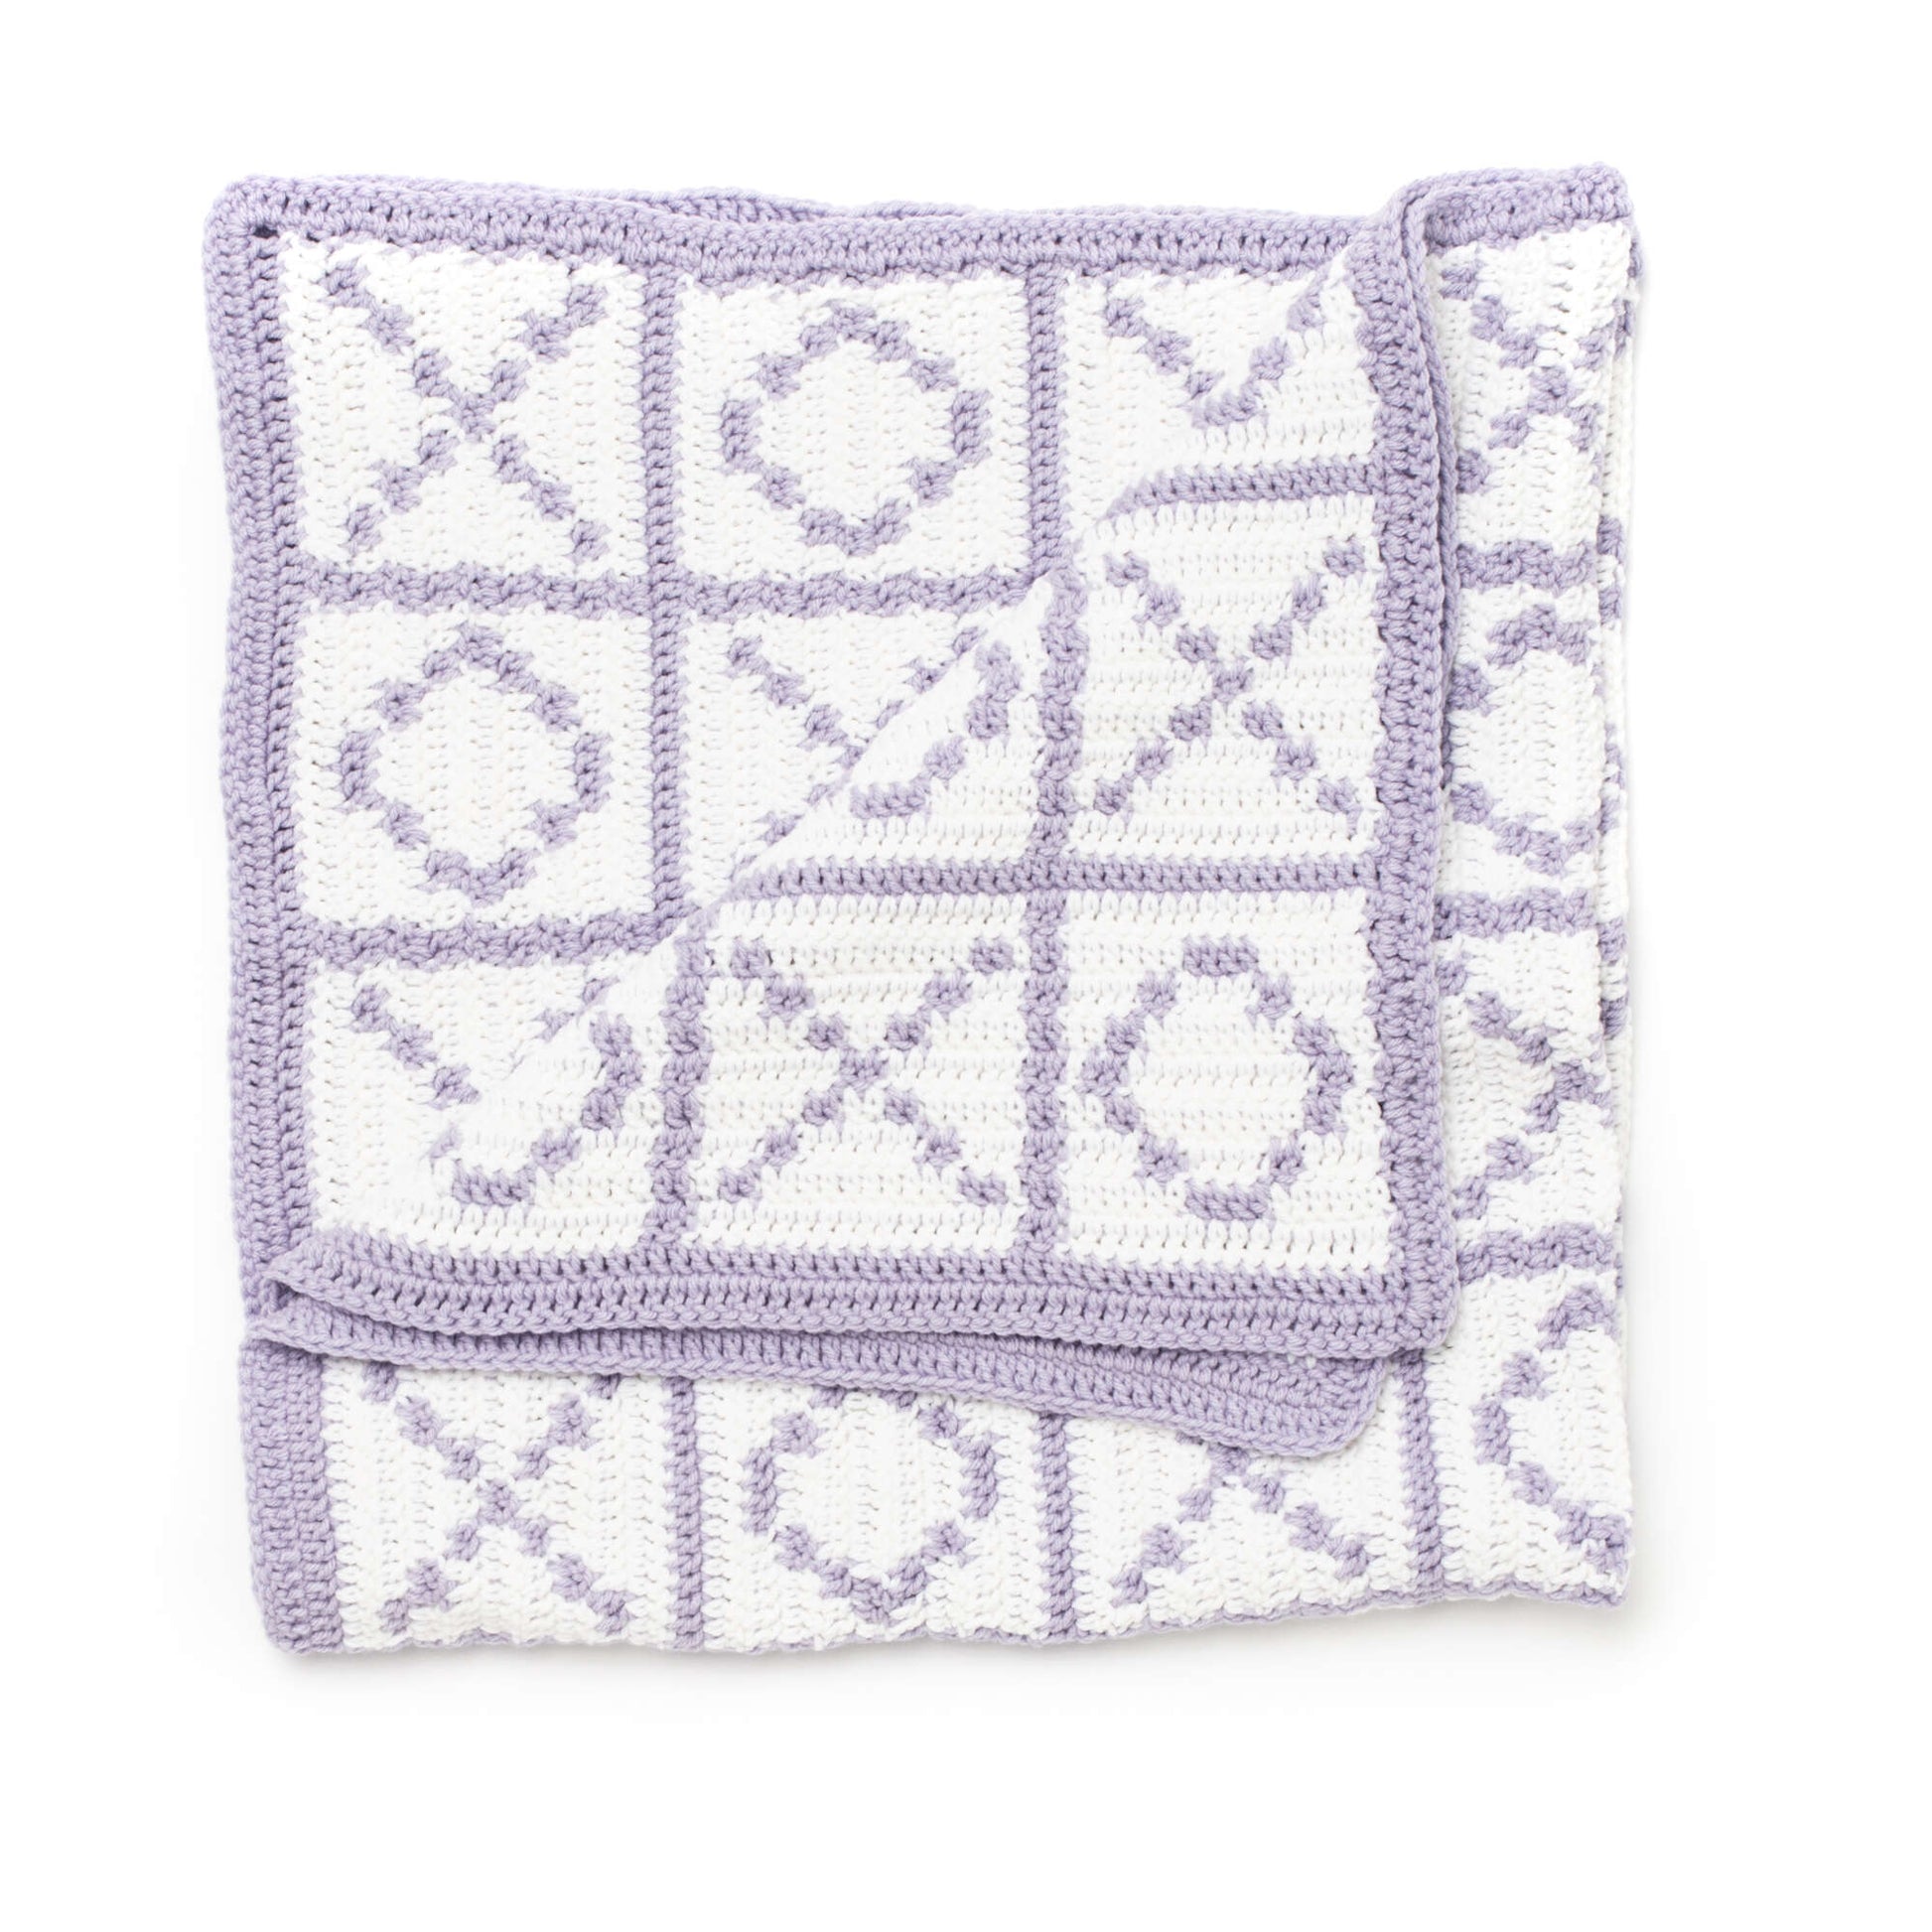 Free Caron Hugs And Kisses Crochet Blanket Pattern